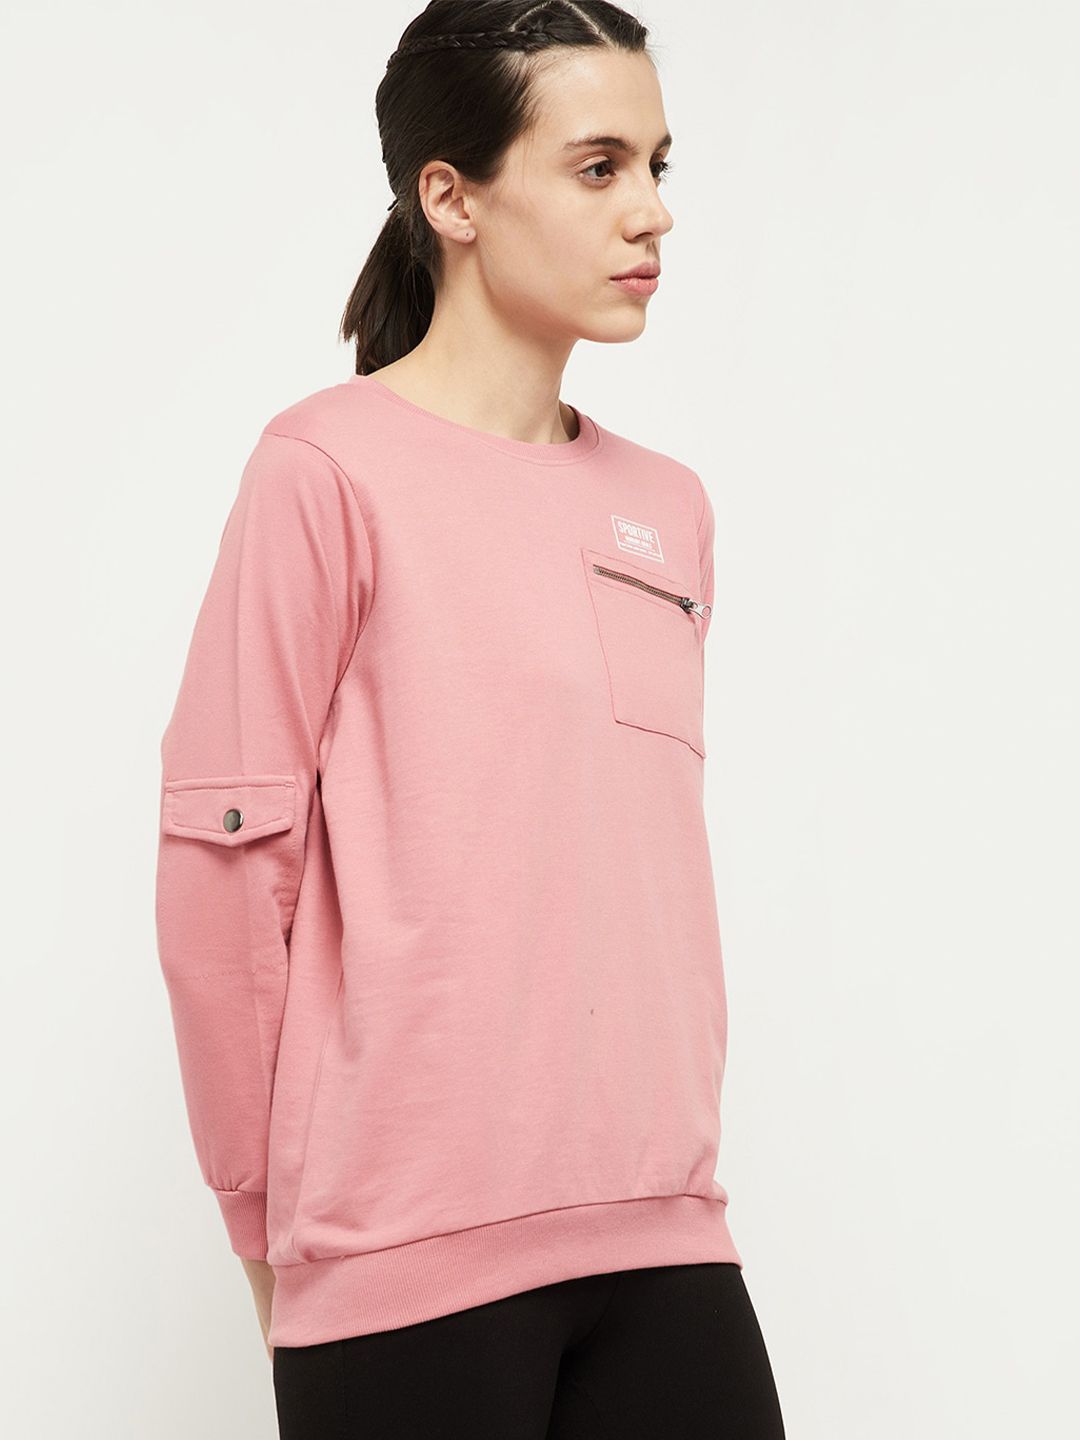 max Women Pink Sweatshirt Price in India